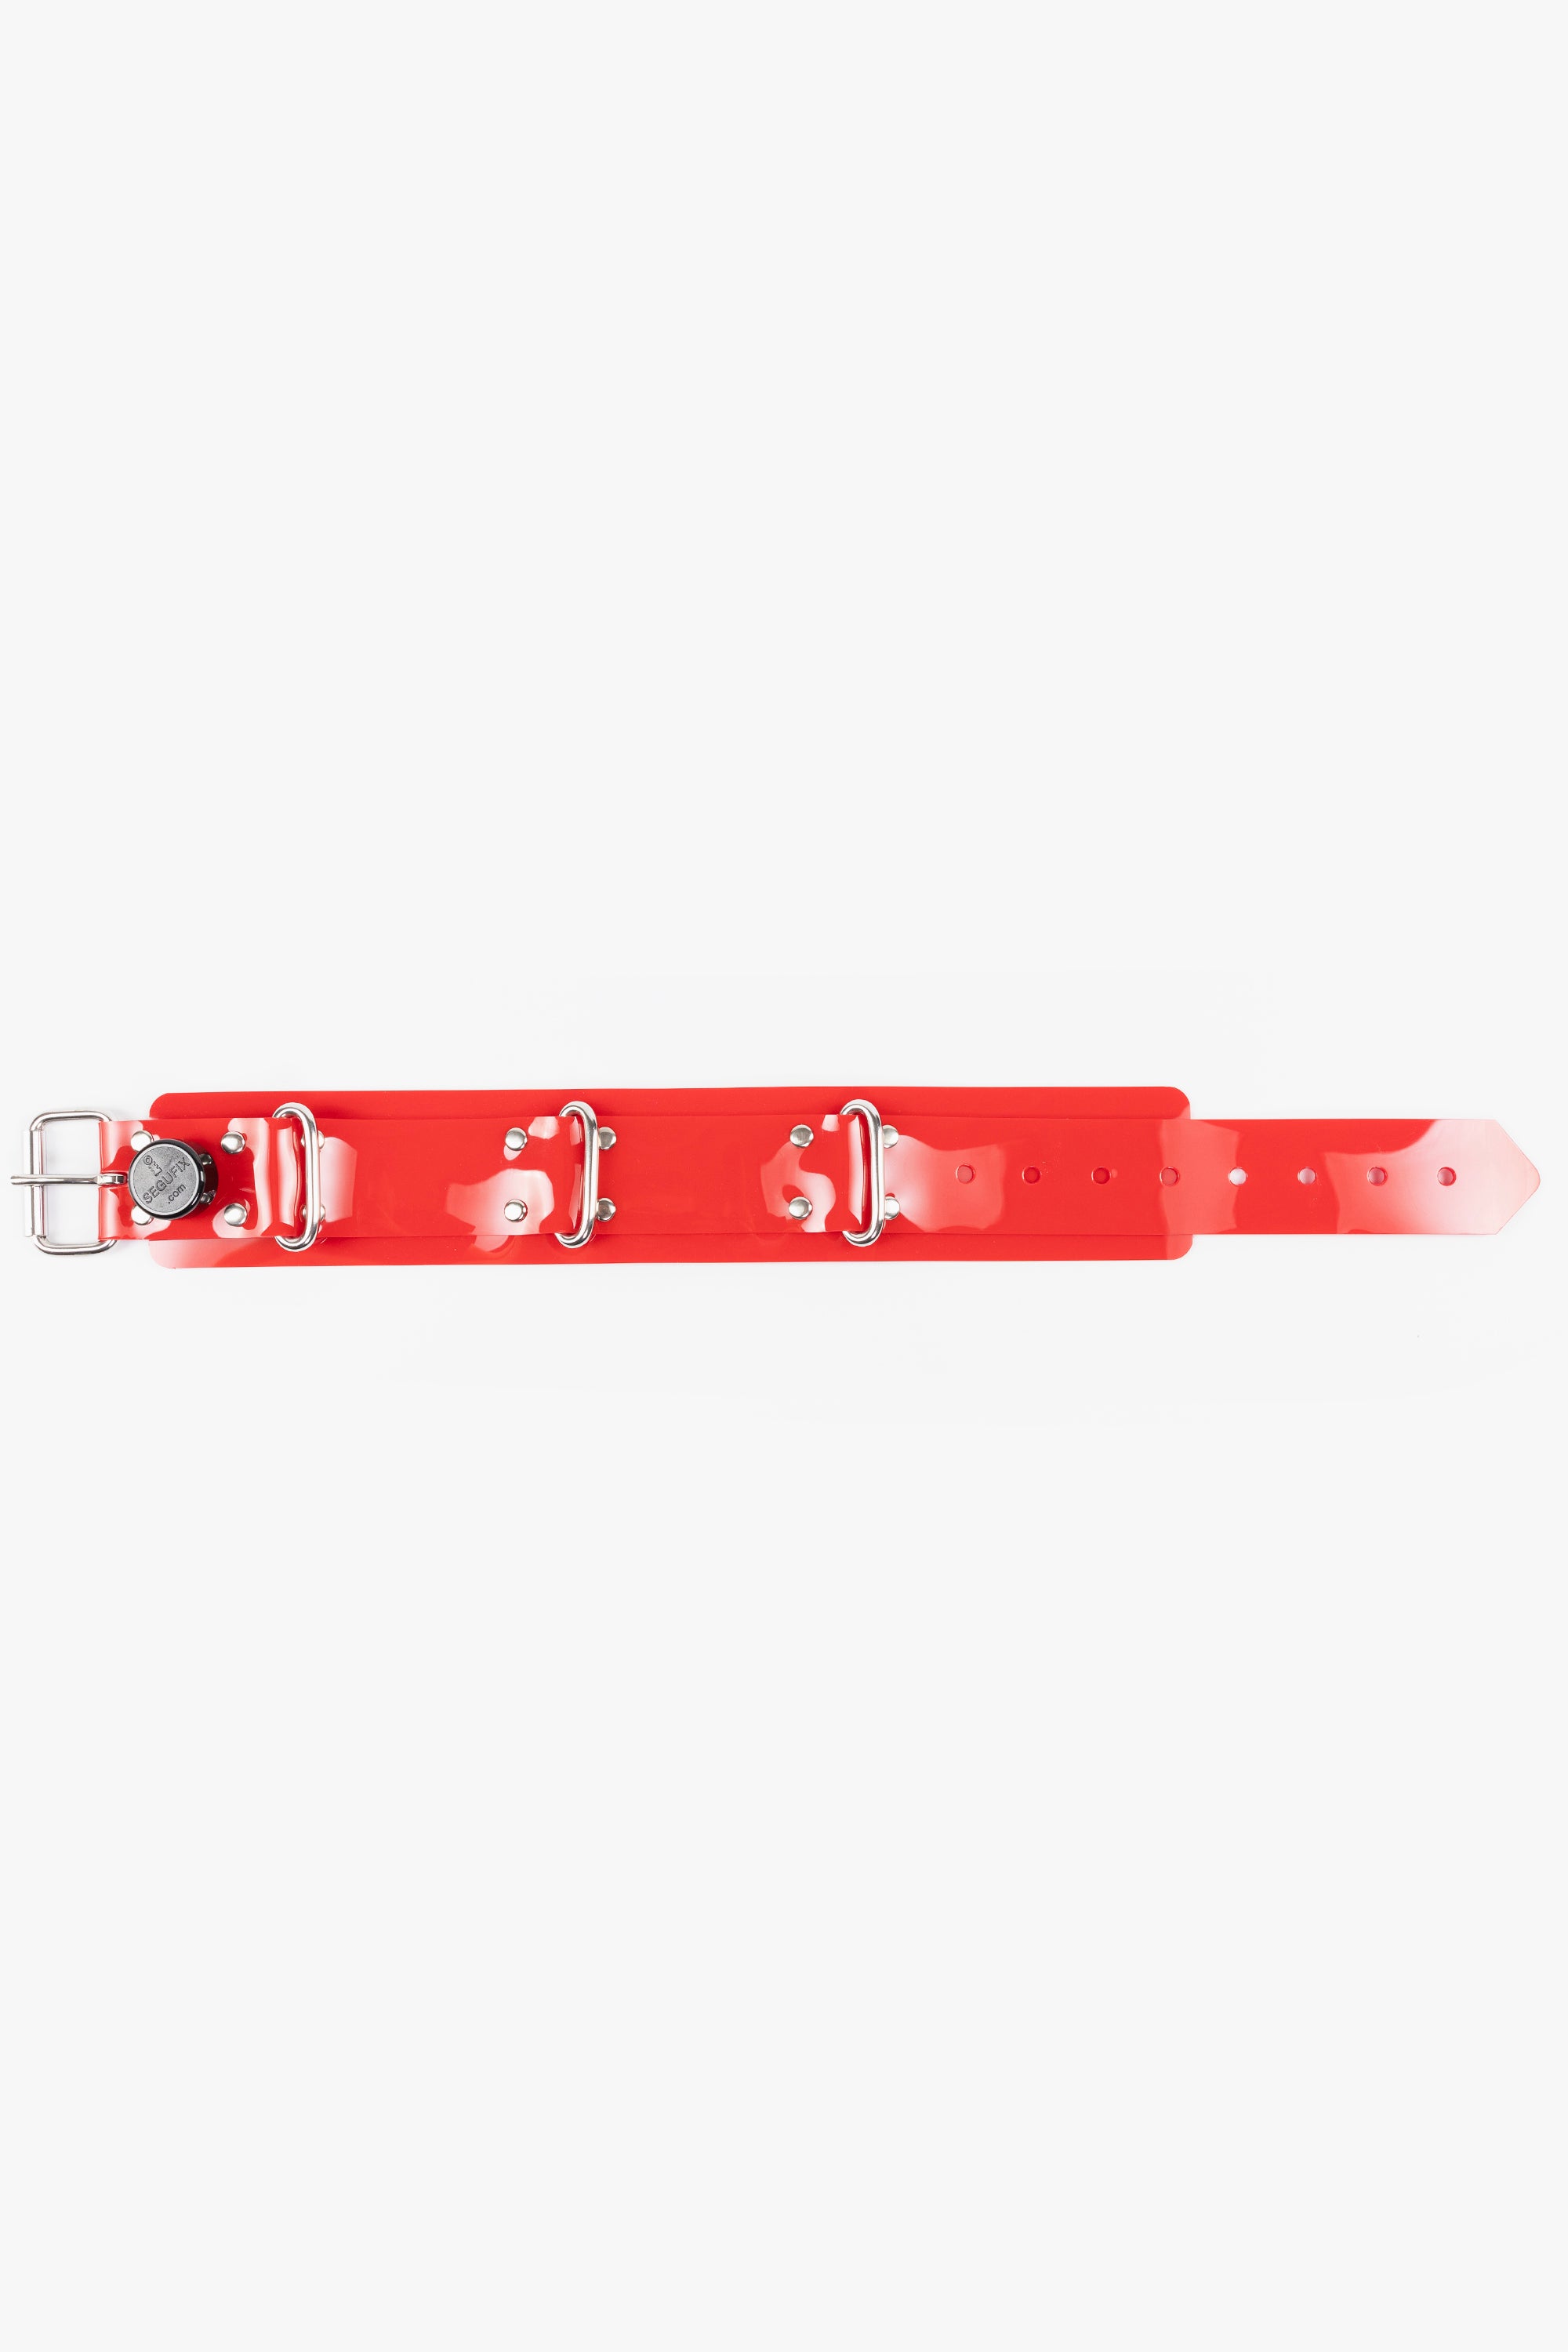 Collar segufix lockable, red/chrome